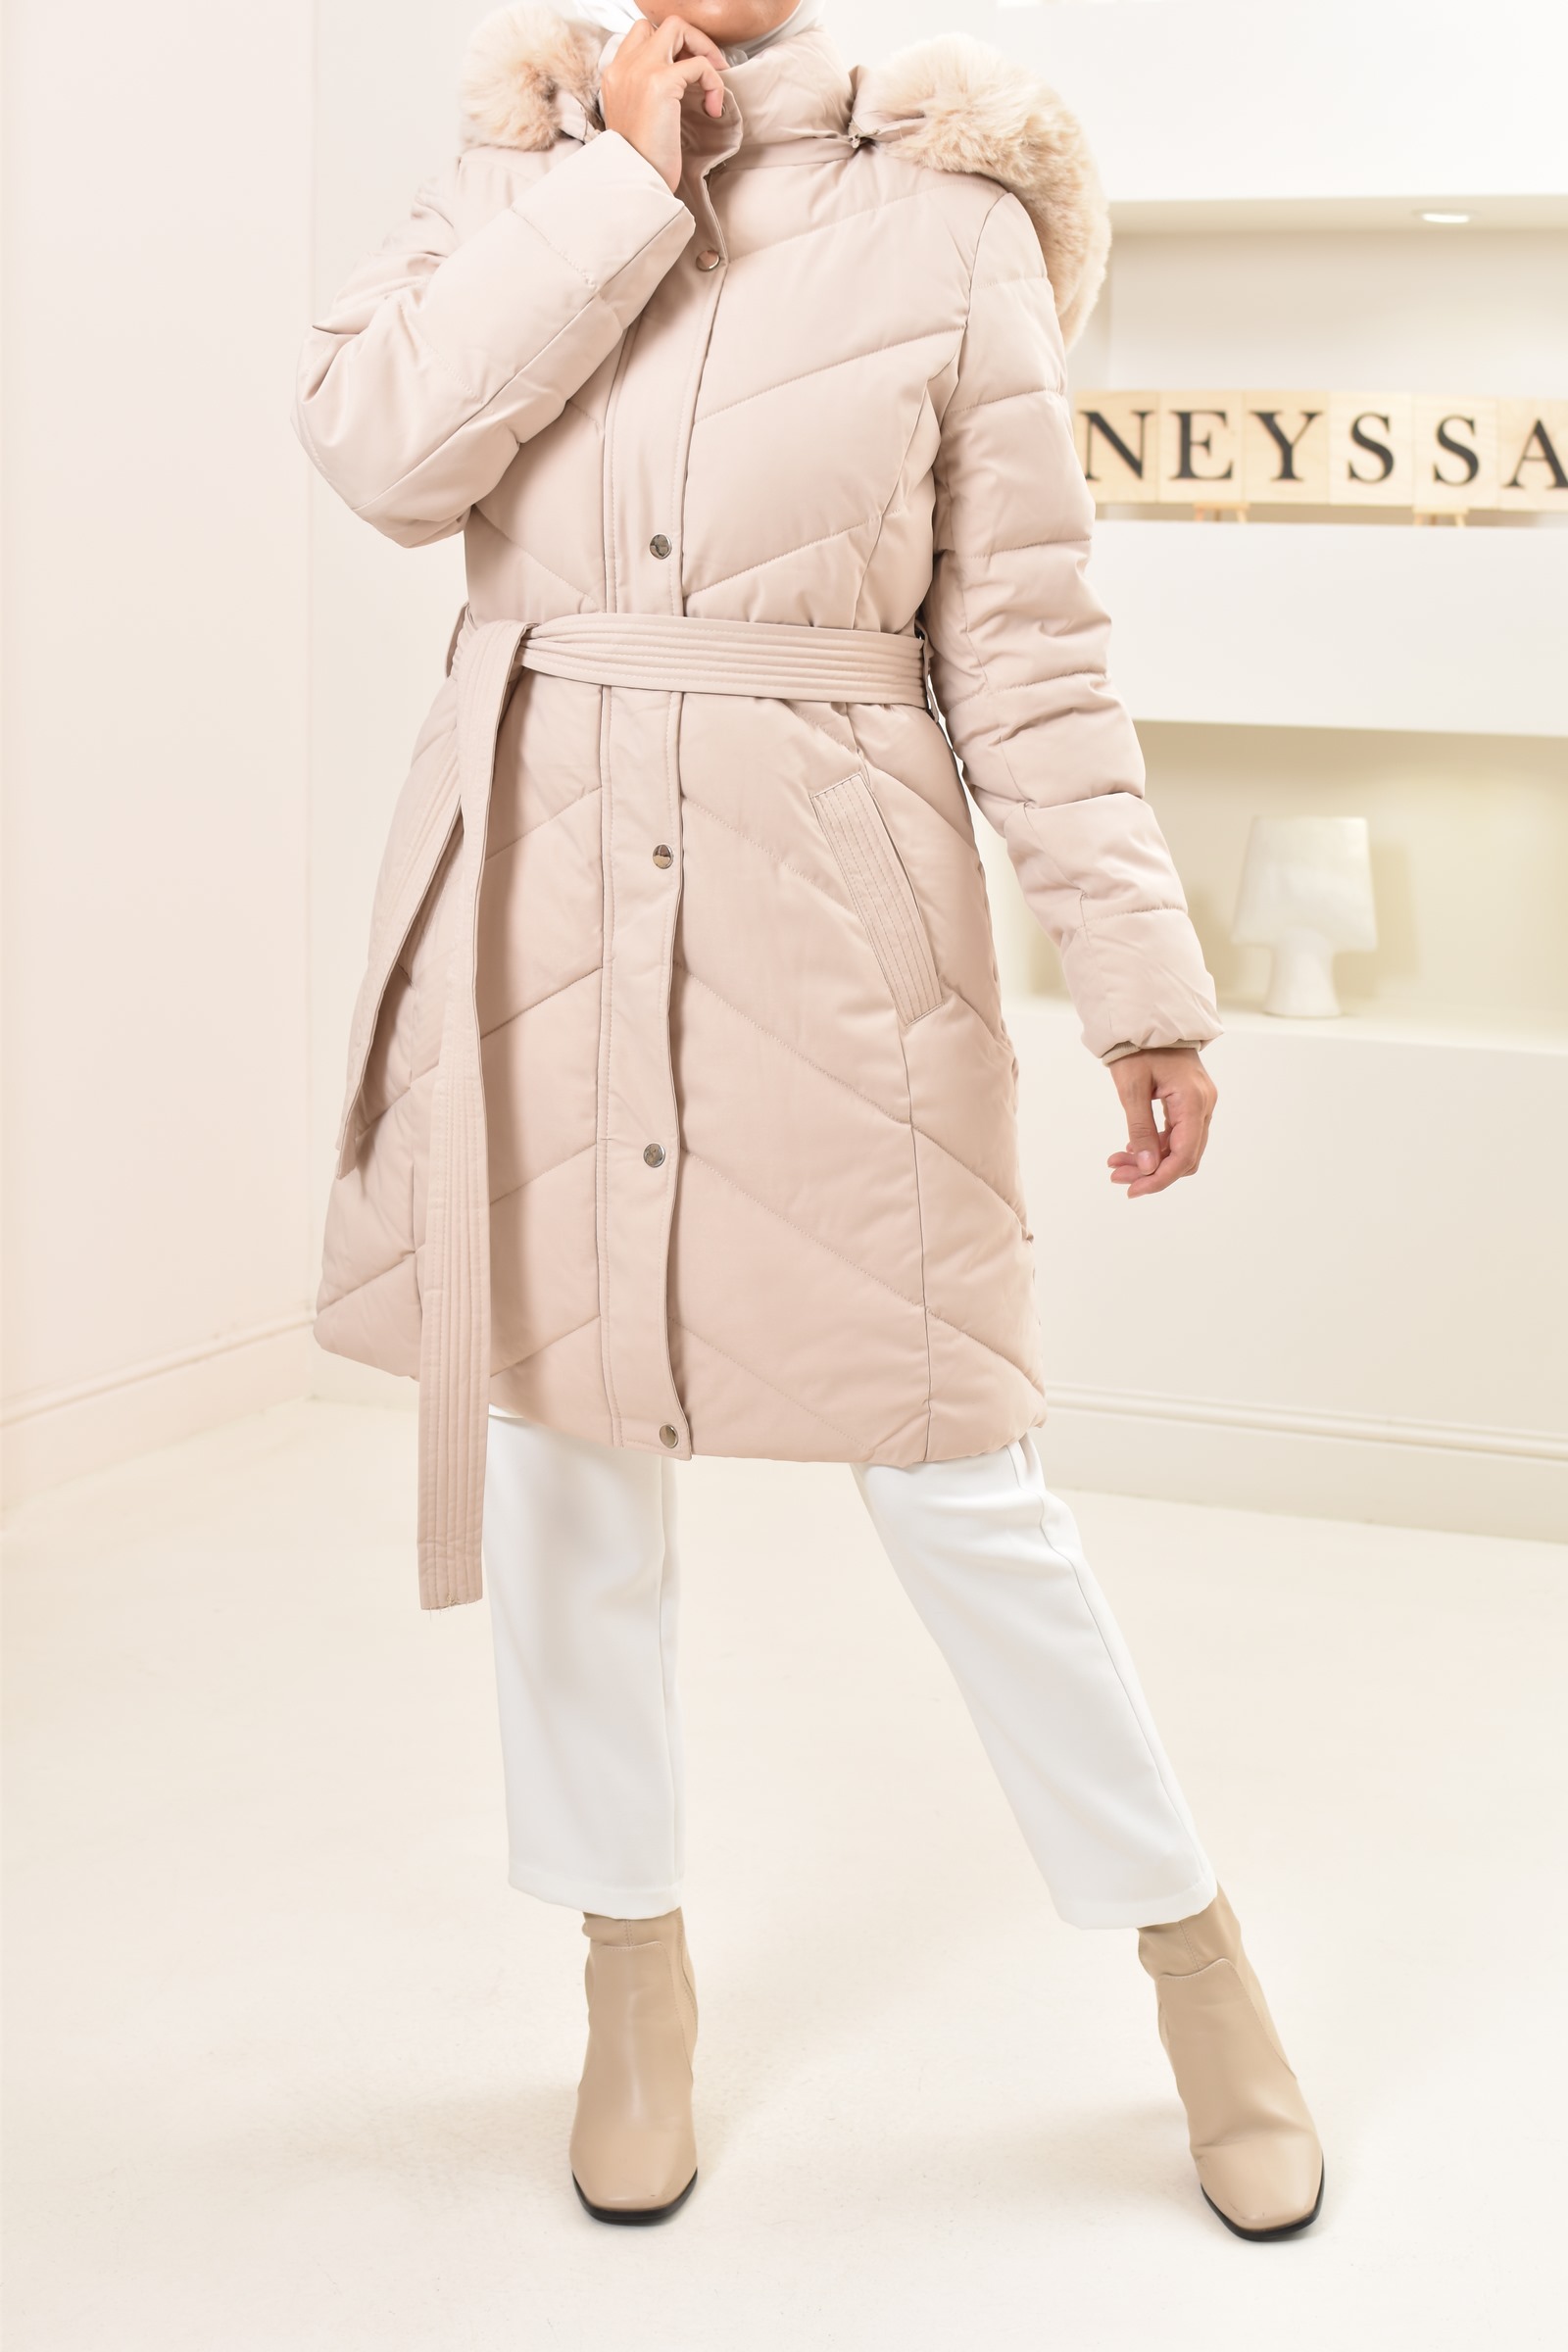 Idée cadeau femme - Neyssa Shop - Neyssa Boutique